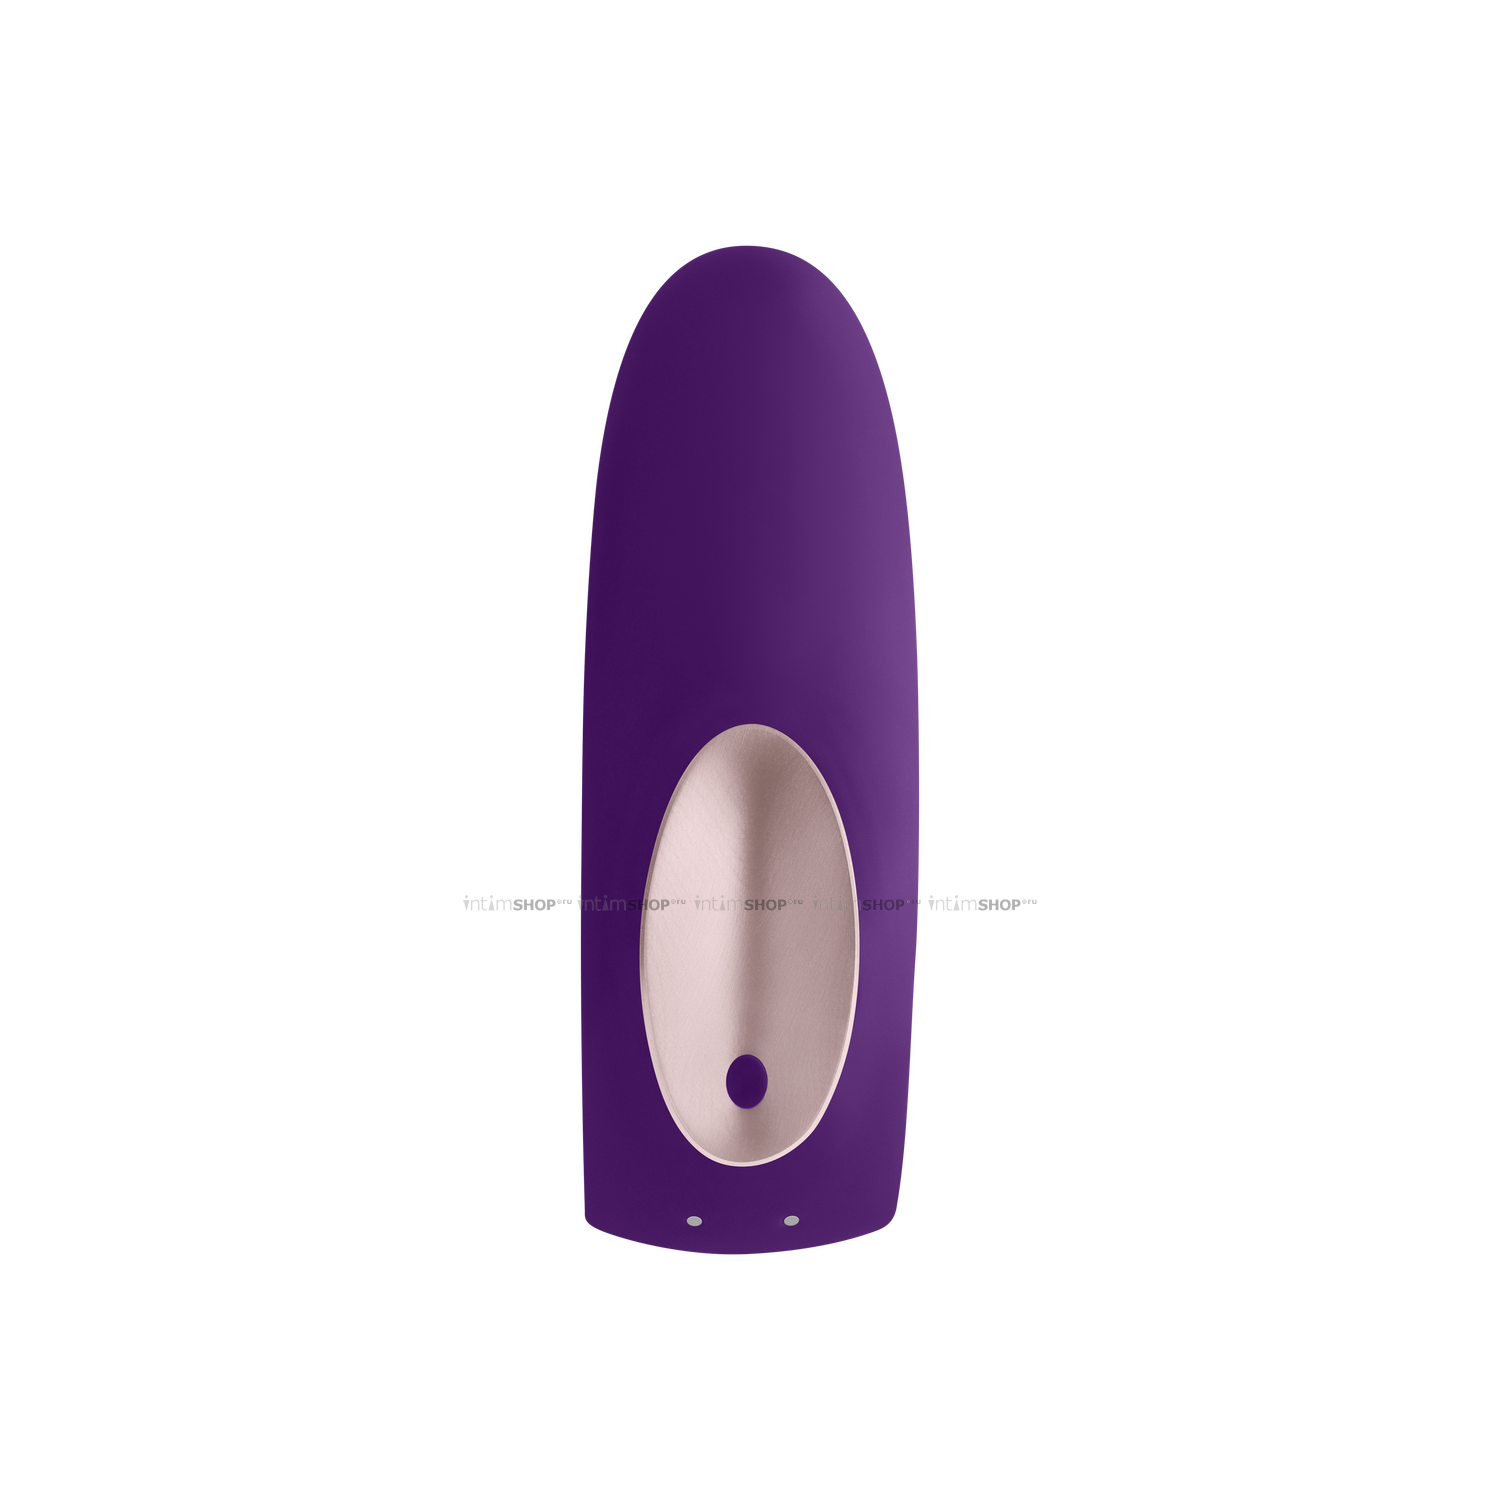 Стимулятор для пар Satisfyer Double Plus, фиолетовый